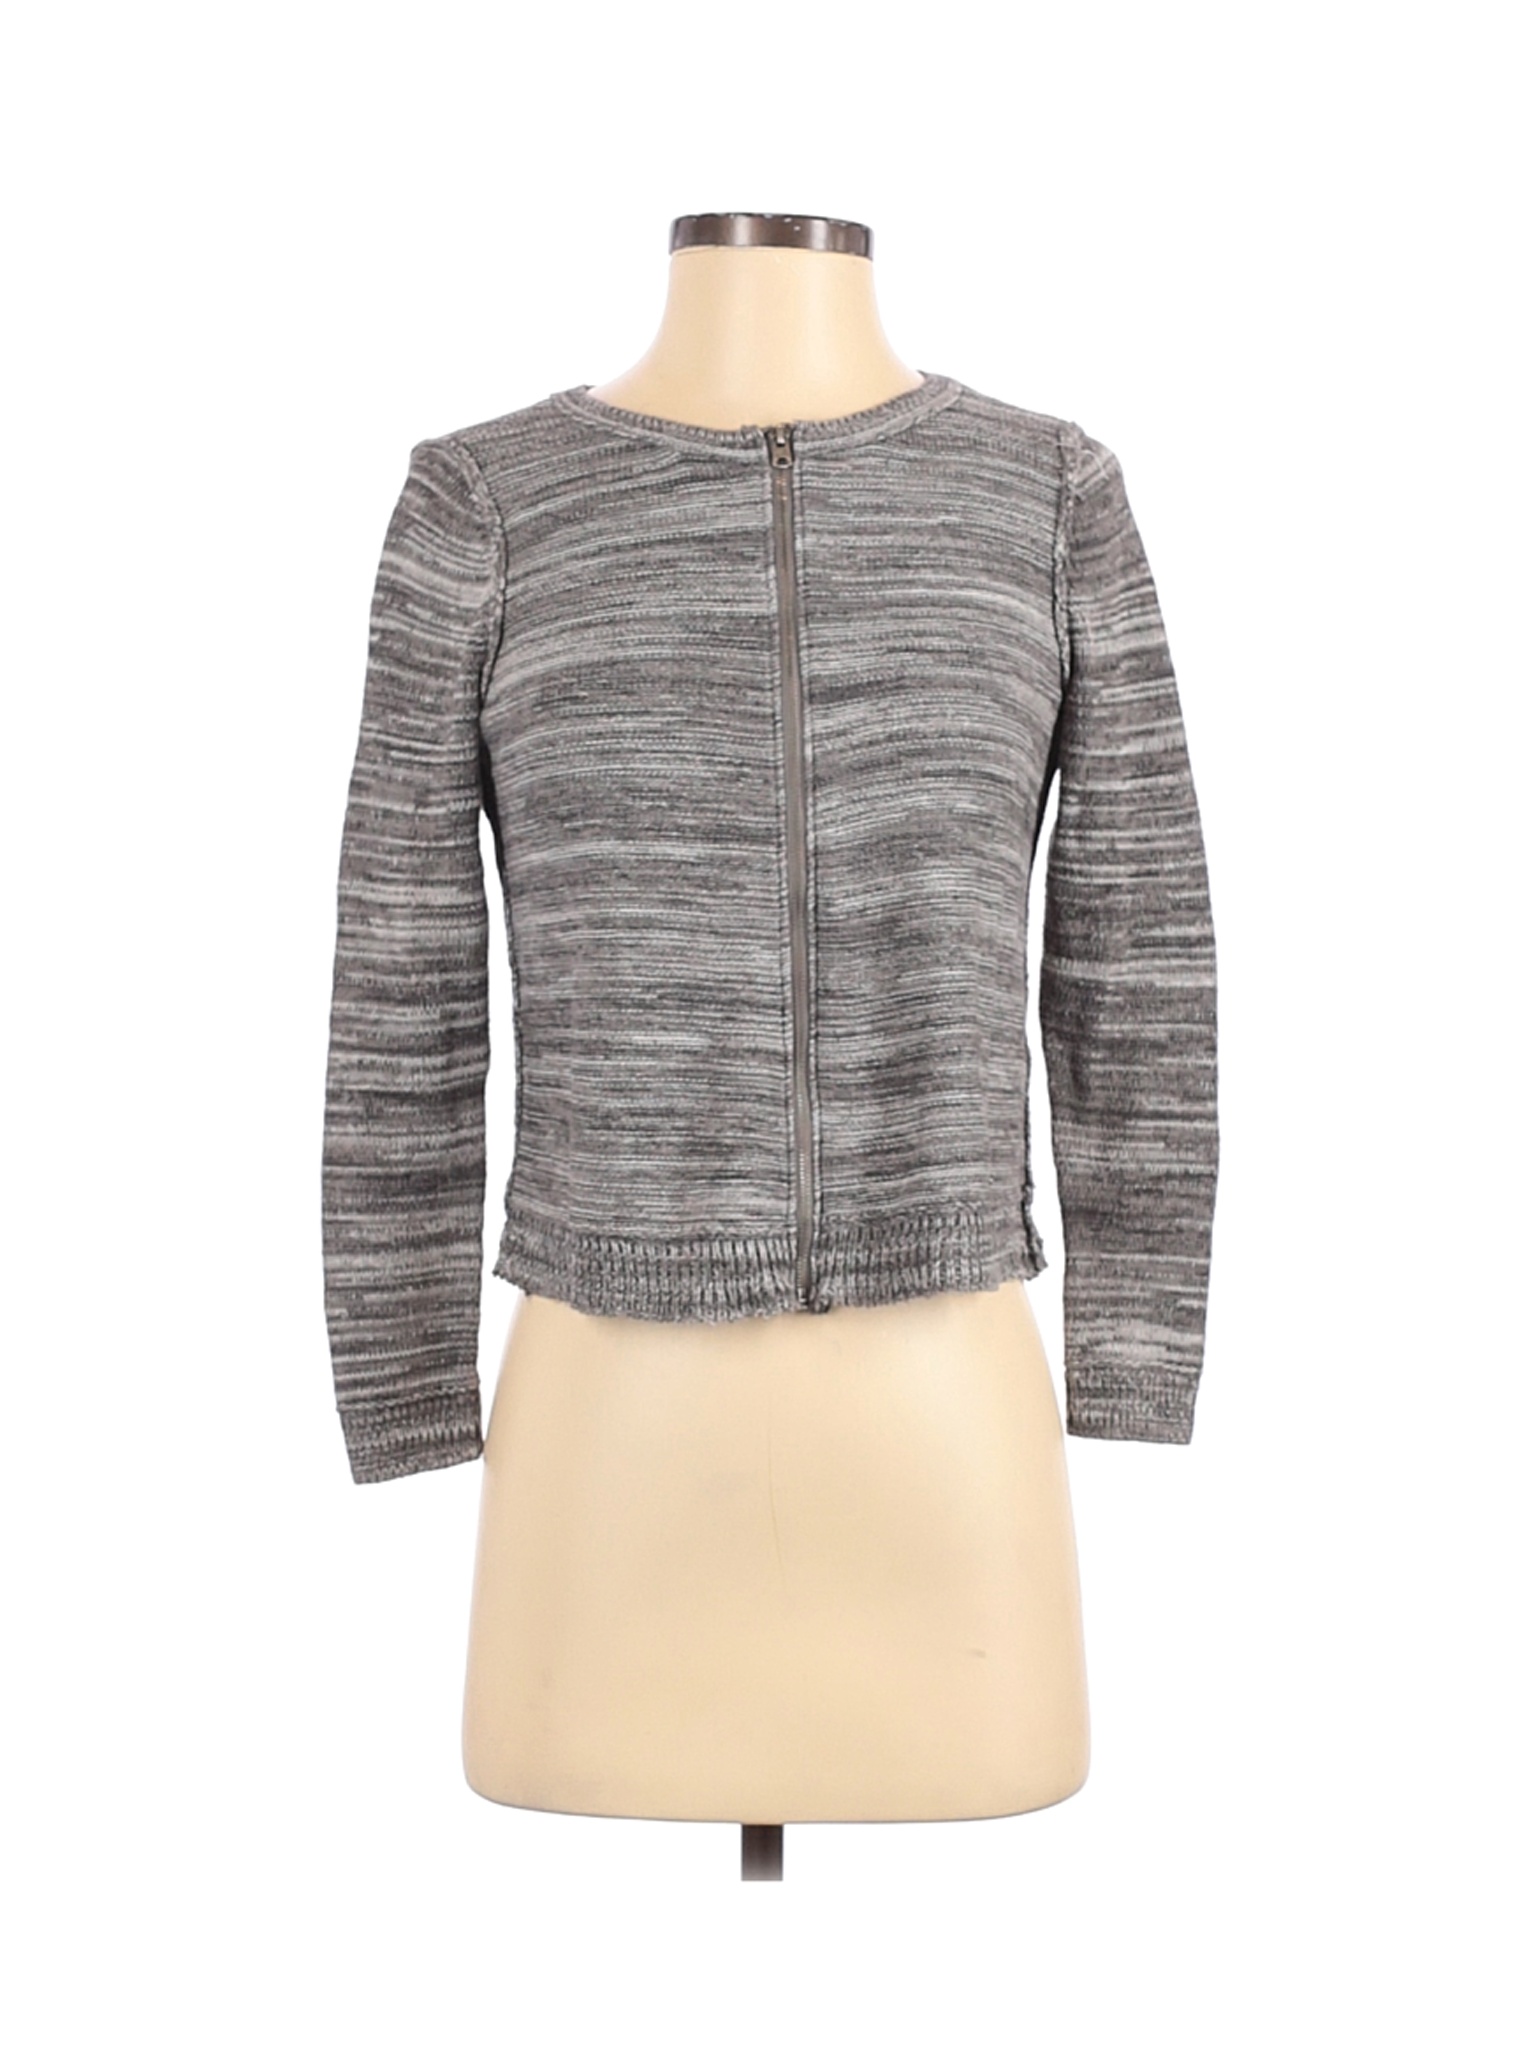 Abercrombie & Fitch Women Gray Jacket S | eBay